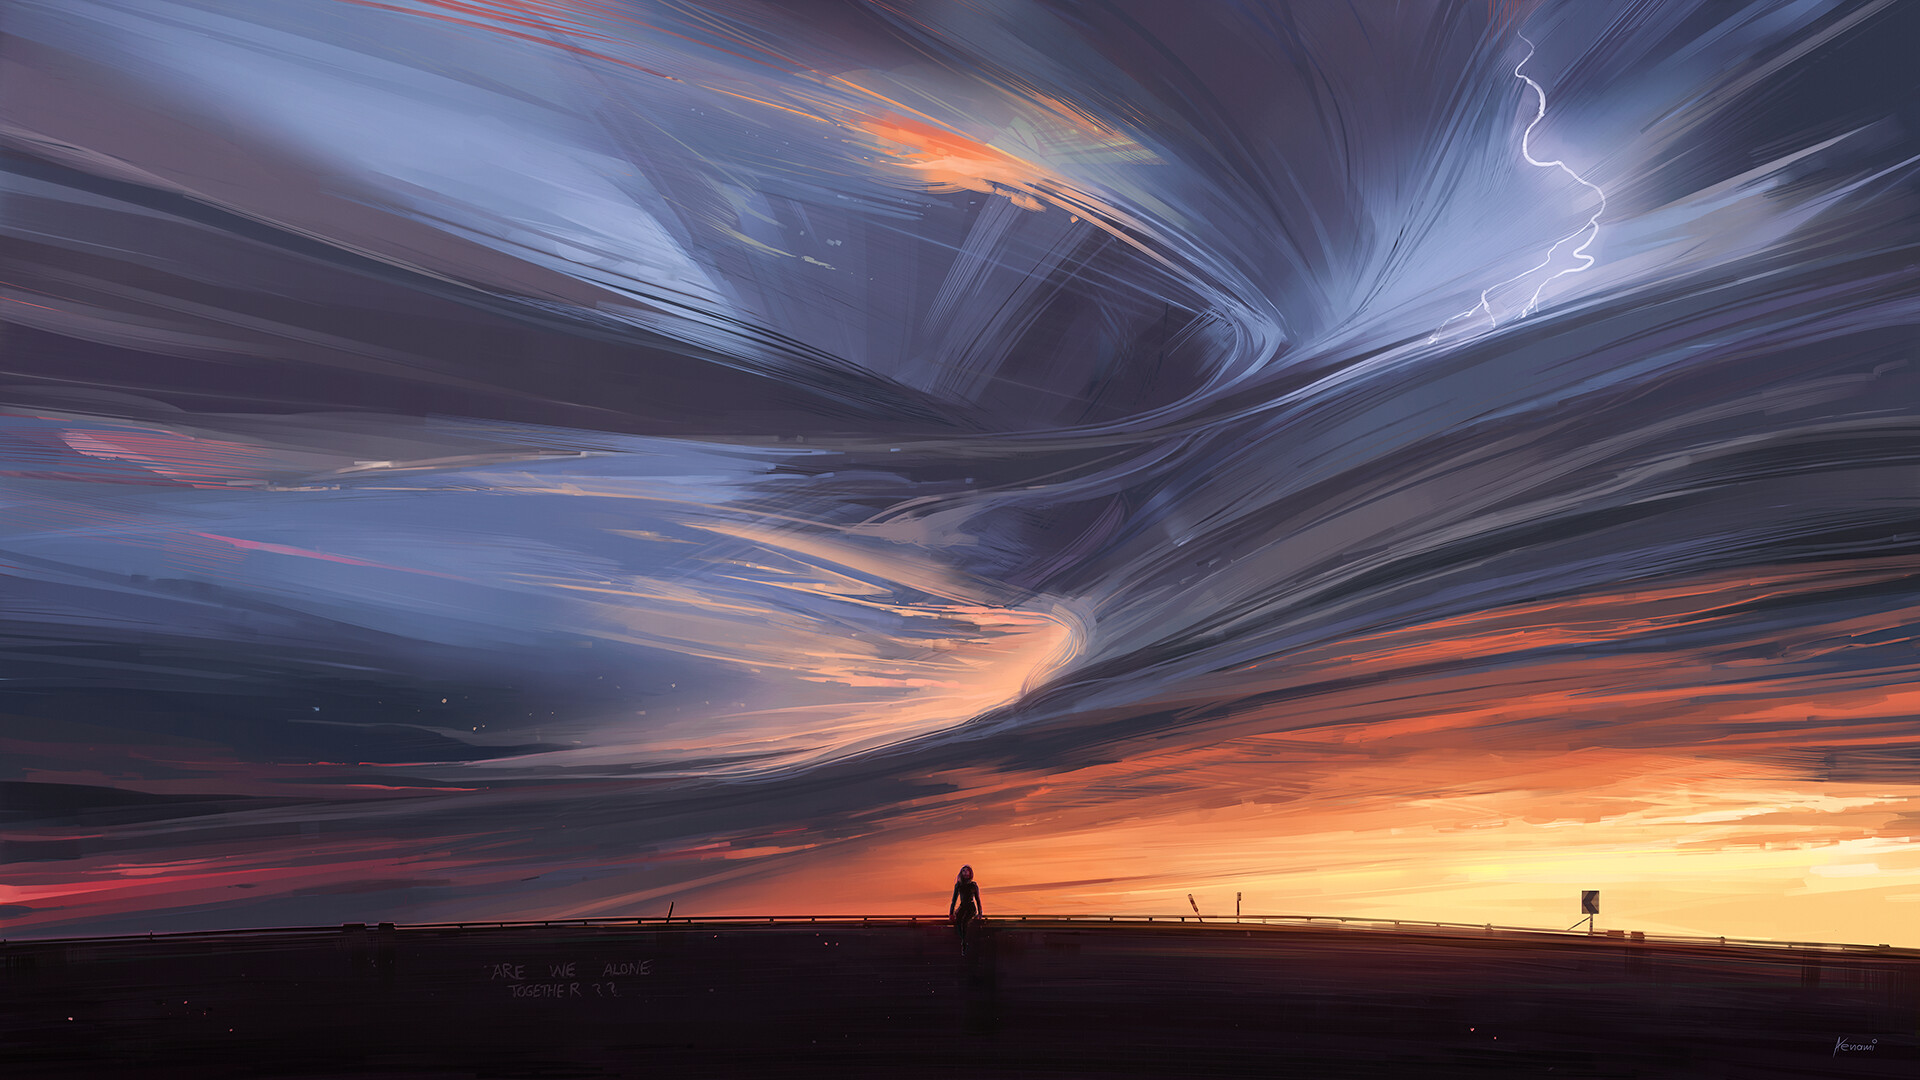 Artwork Digital Art Sunset Clouds Aenami 1920x1080